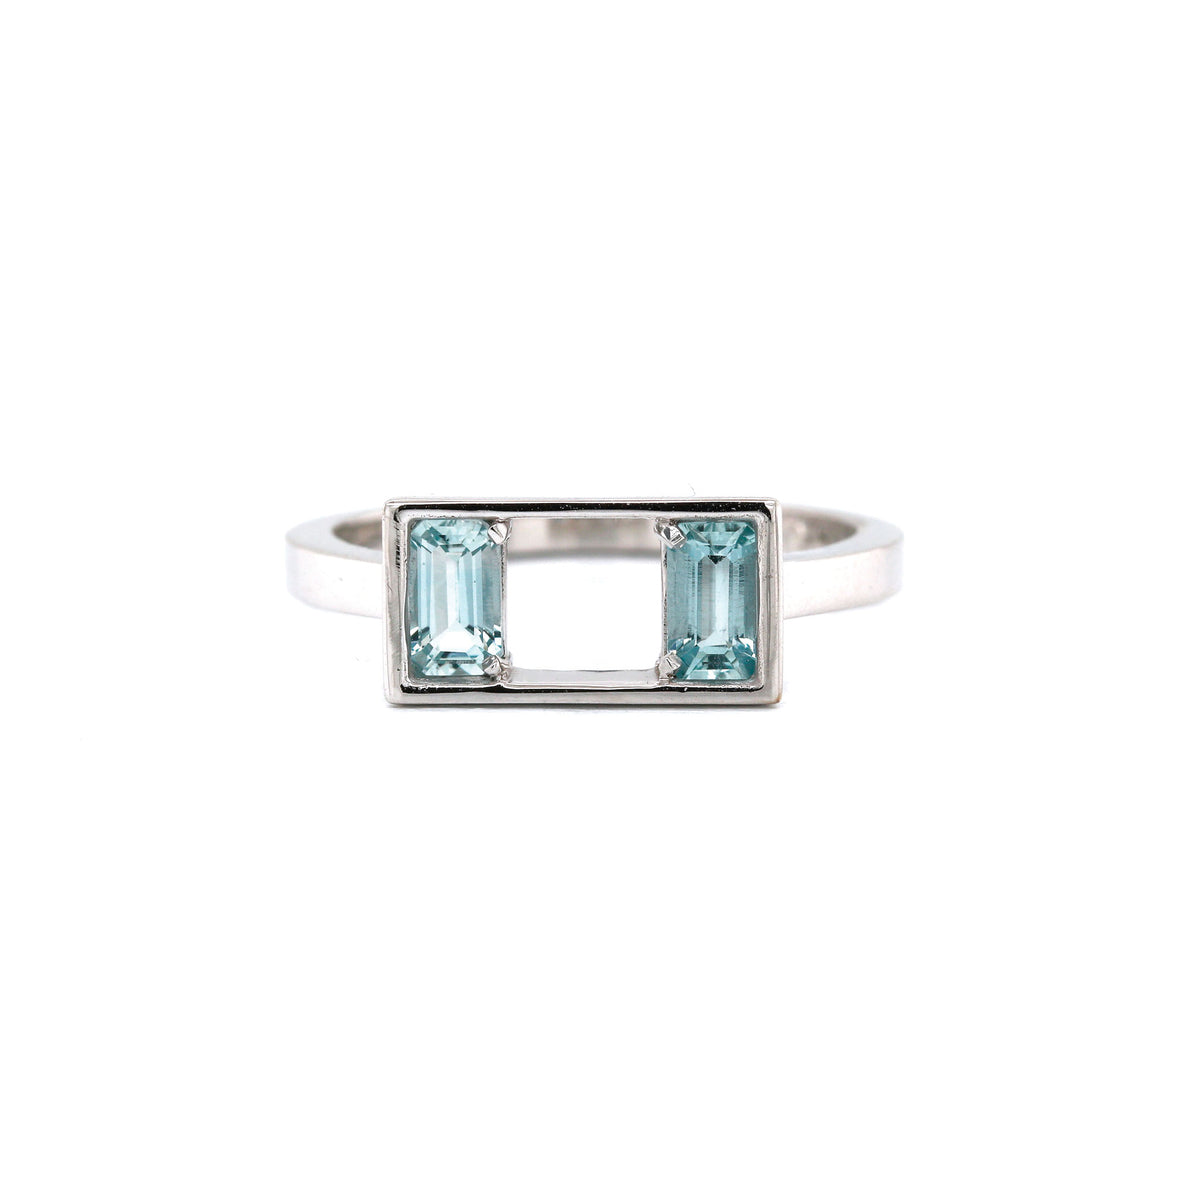 The Rahma Ring with Emerald Cut Aquamarine